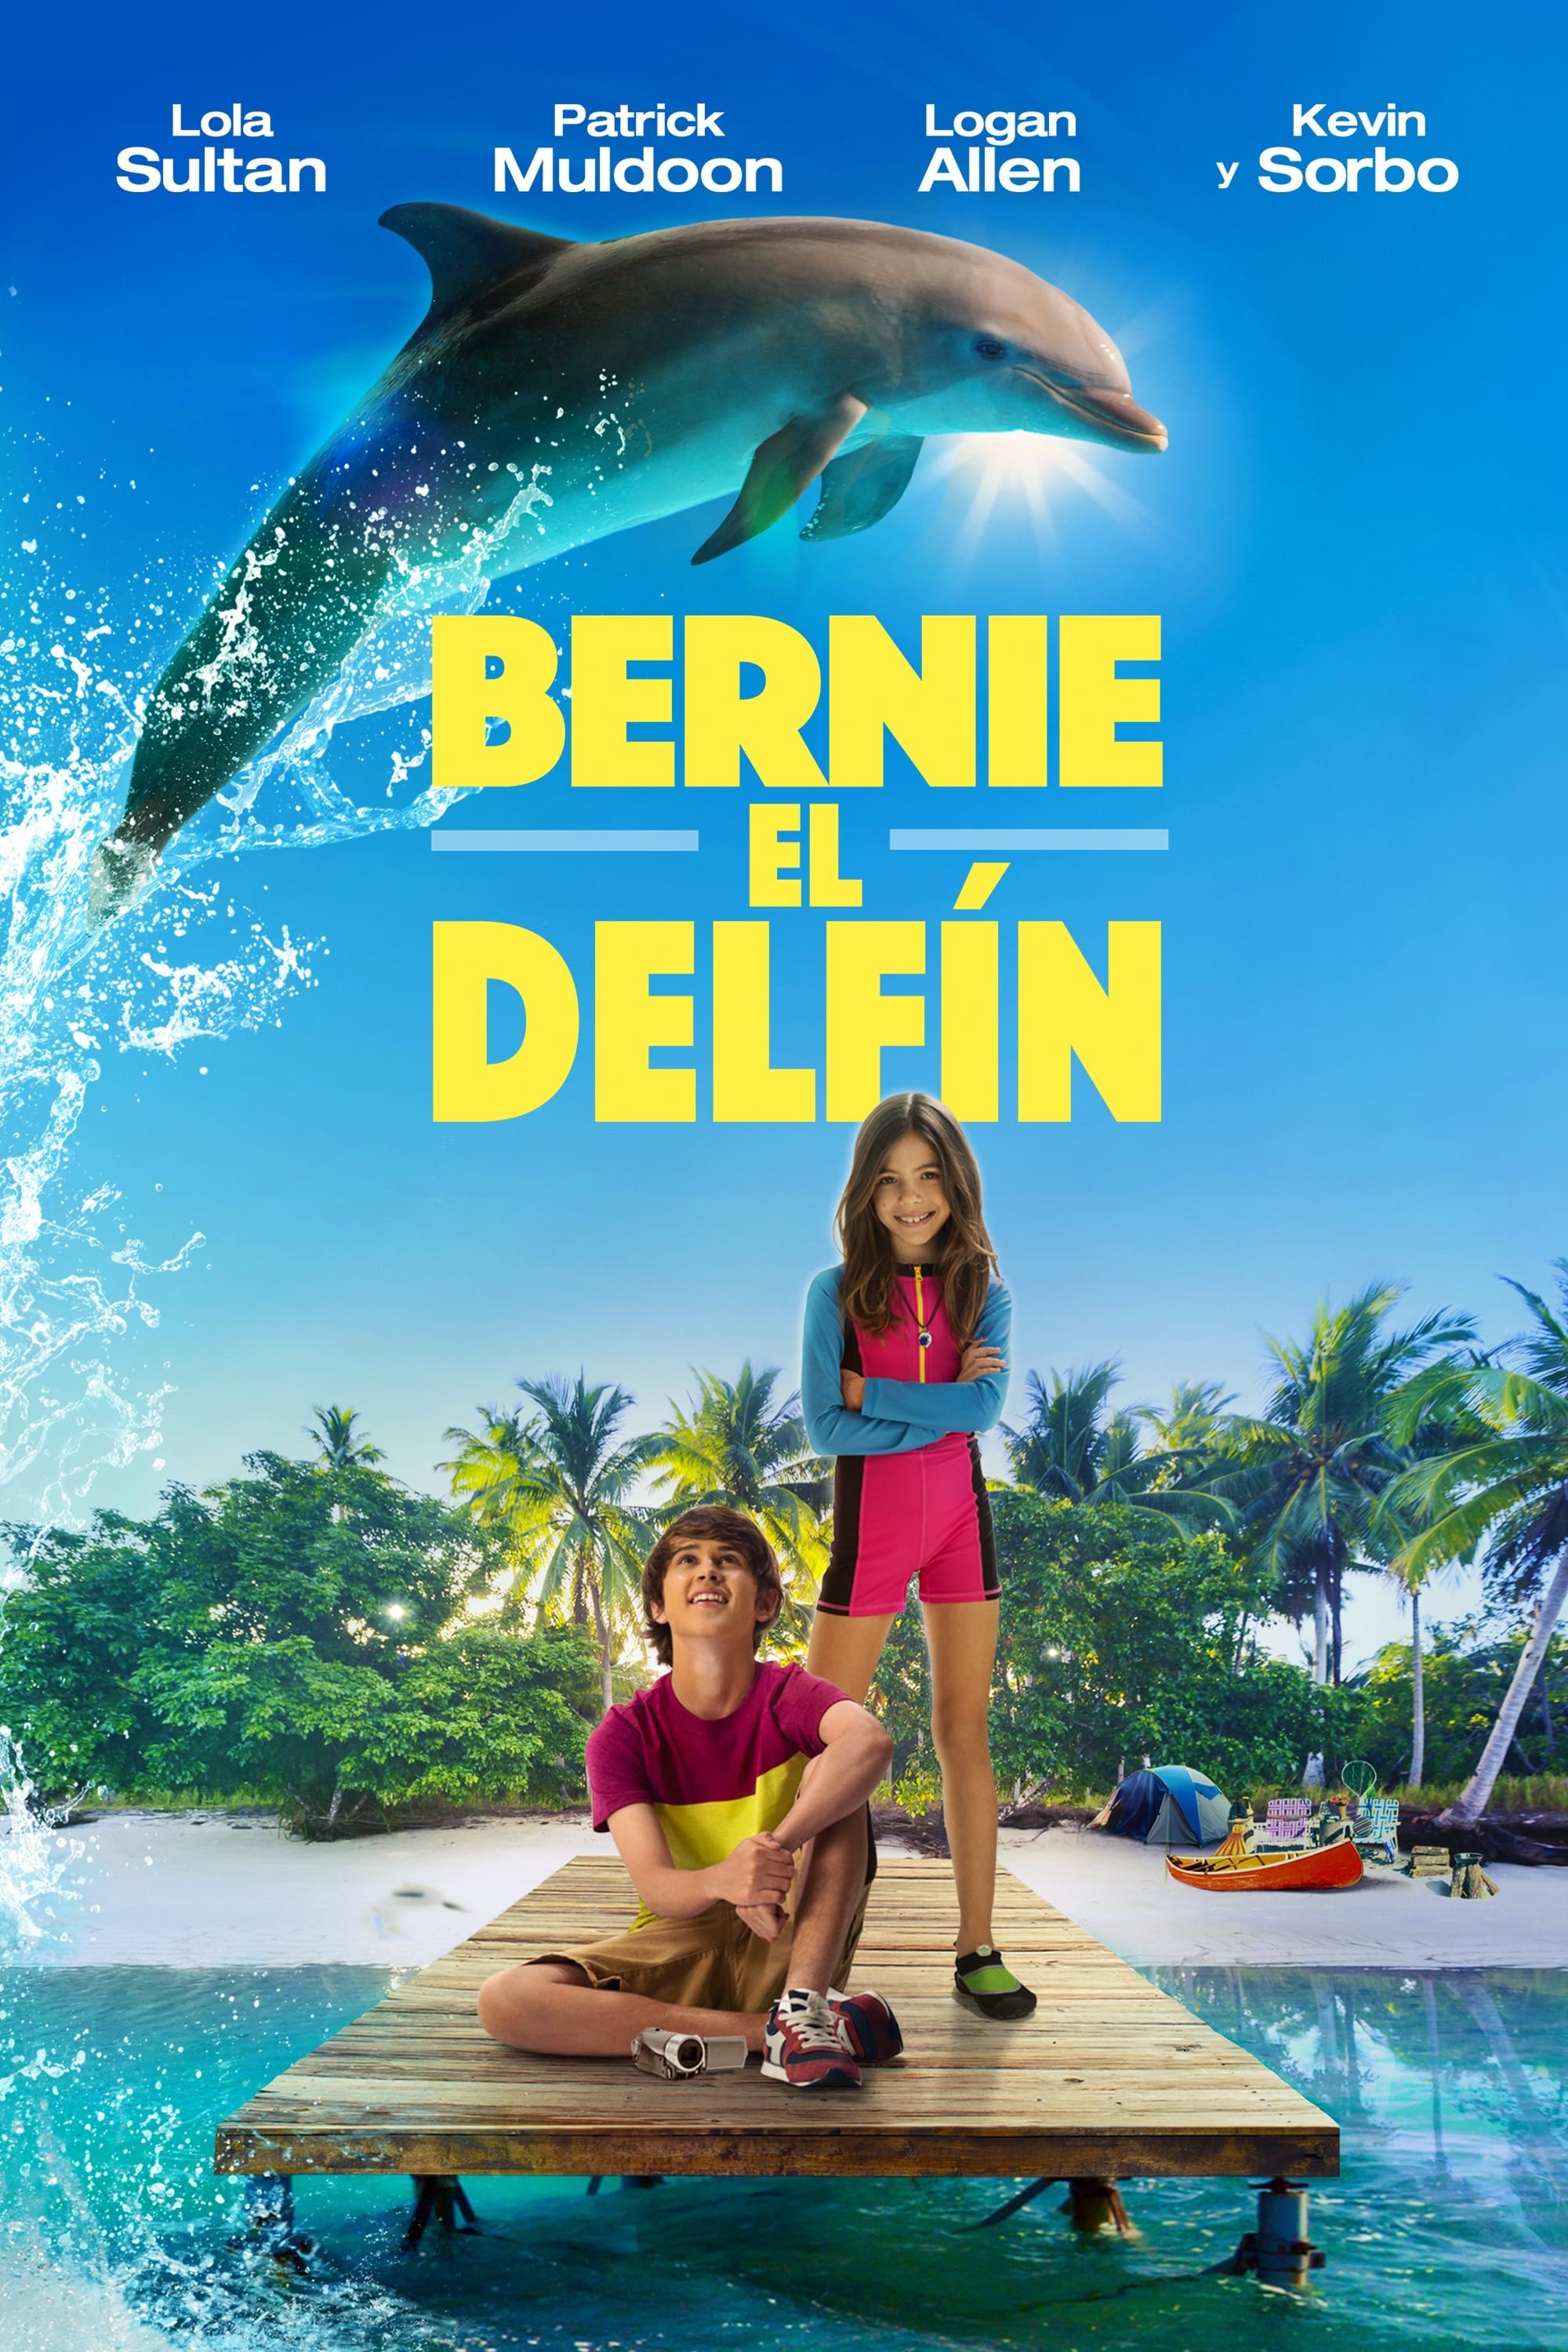 Bernie El Delfin 2